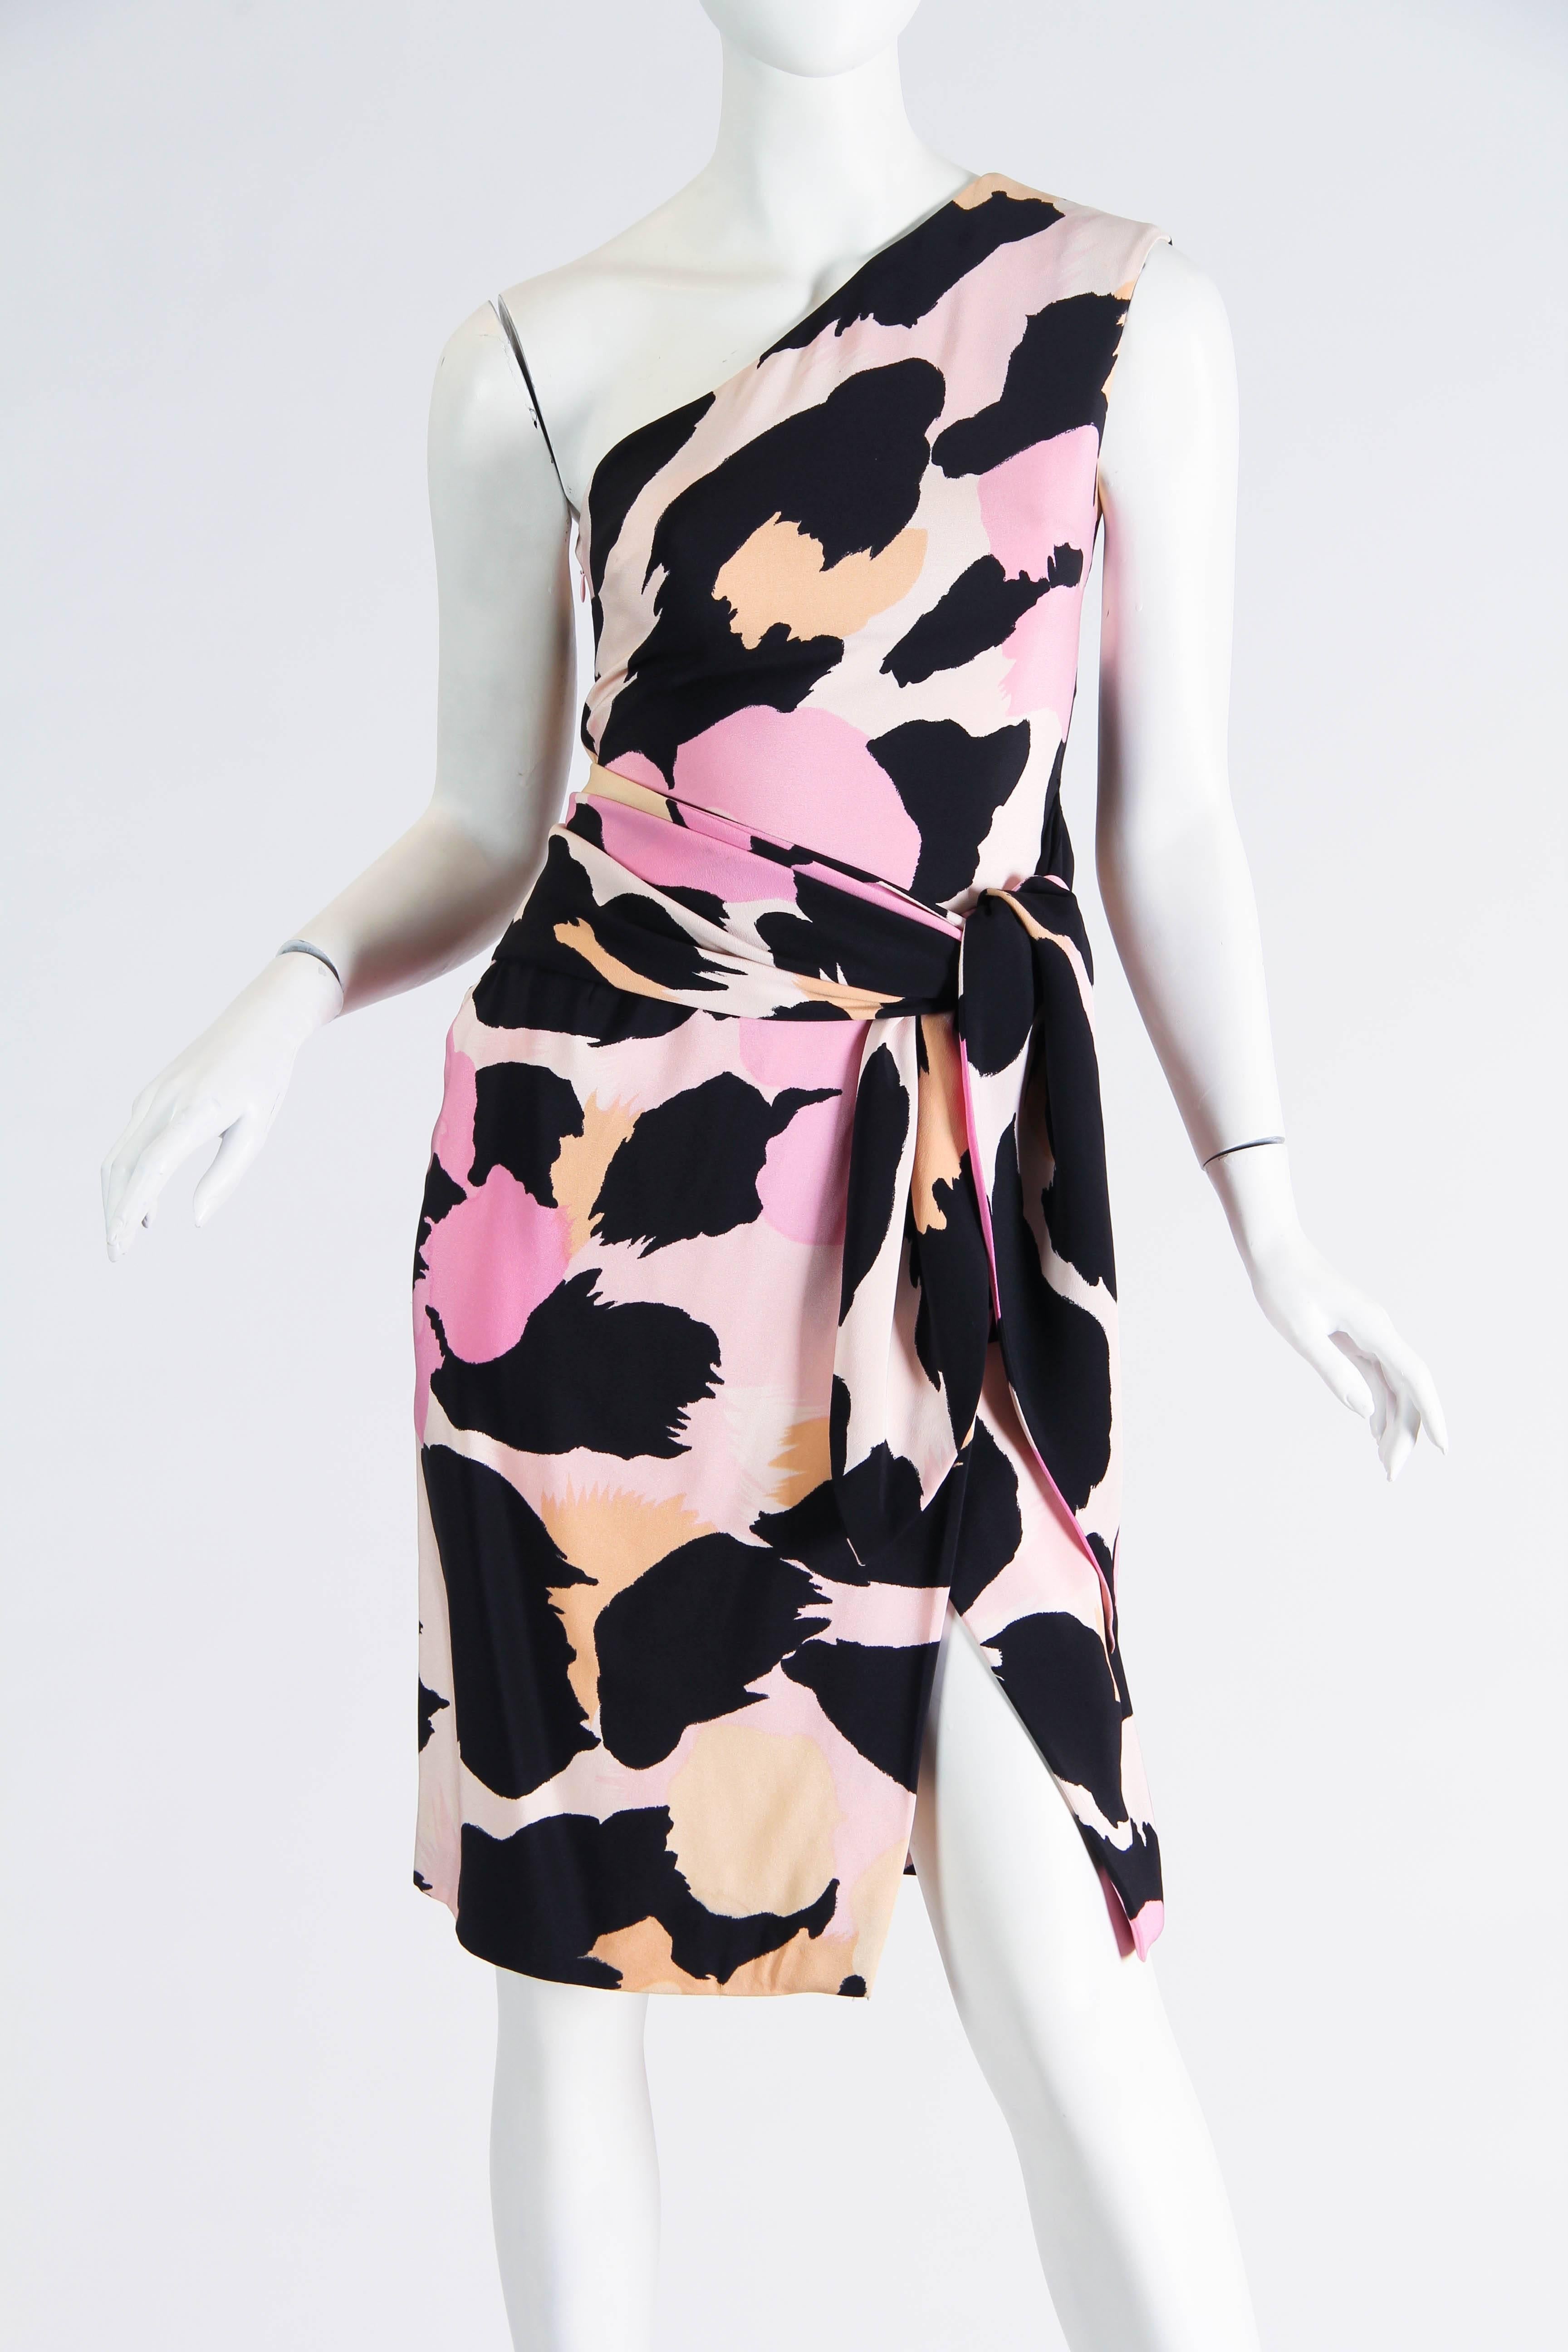 Sexy Jean Louis Scherrer Animal Print Dress 1